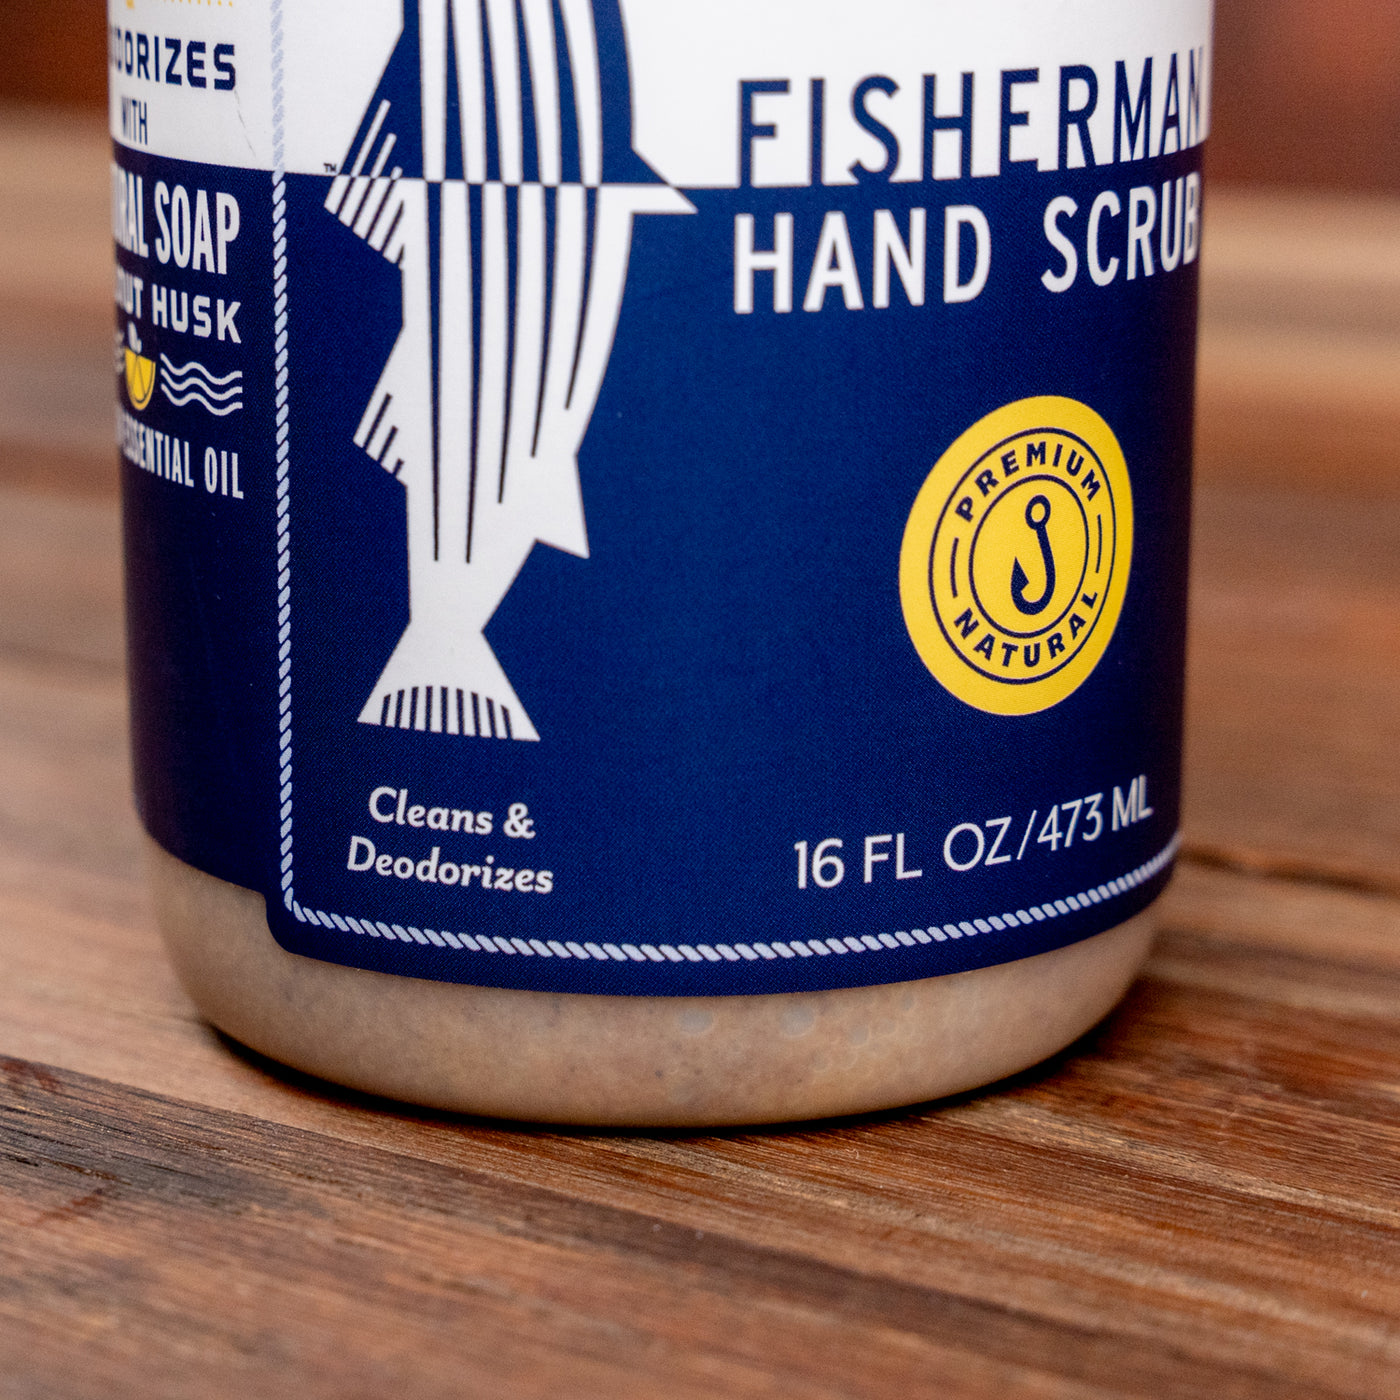 Fisherman Hand Scrub